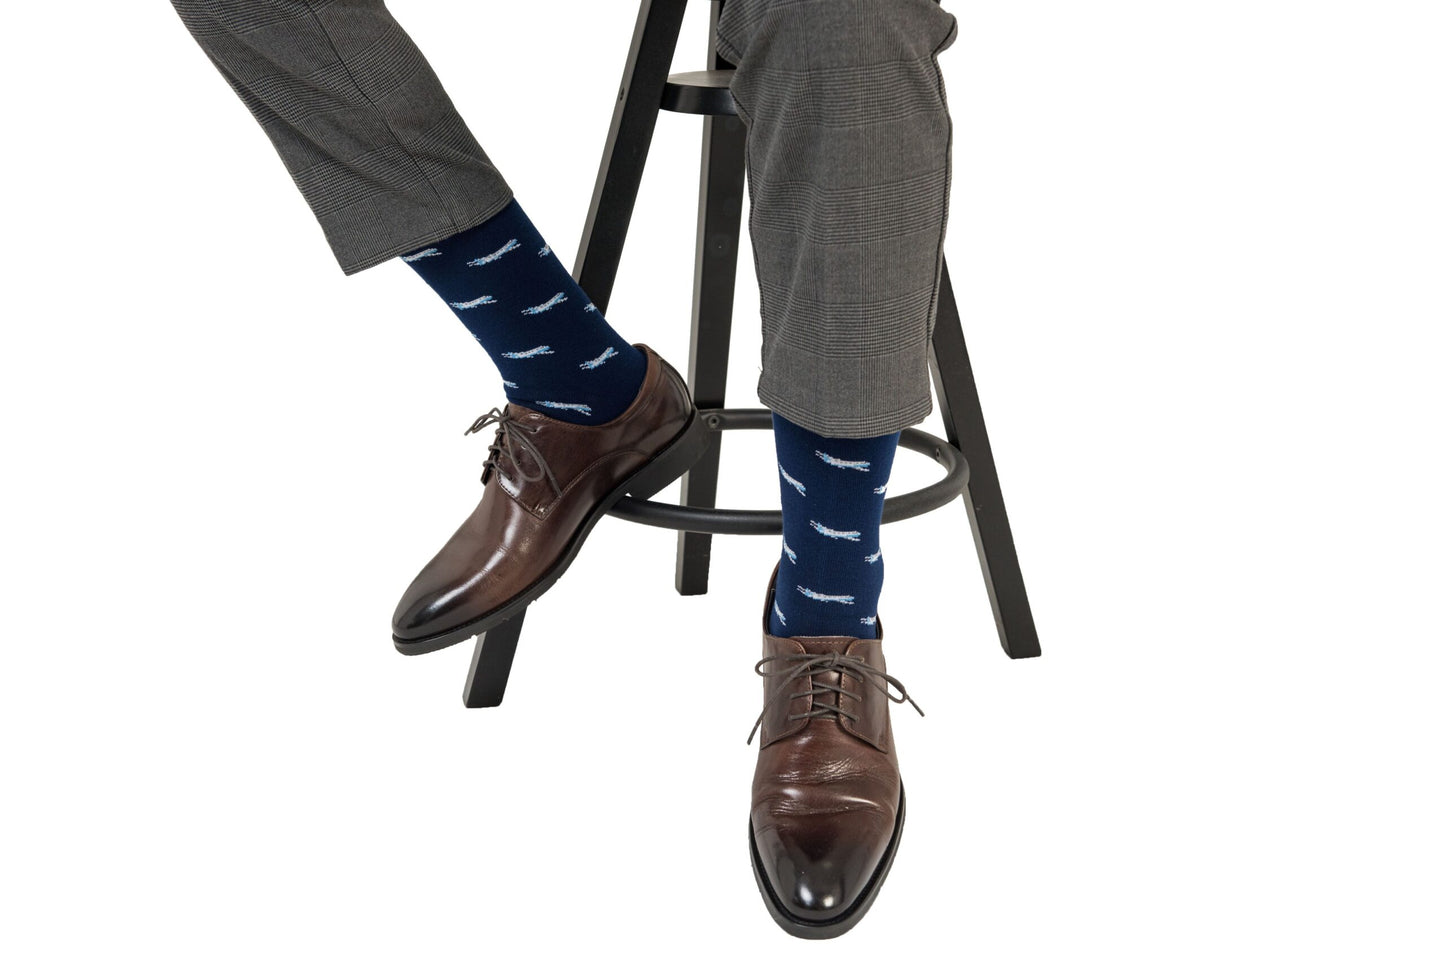 Description: A man sitting on a stool wearing a pair of Aeroplane Socks.